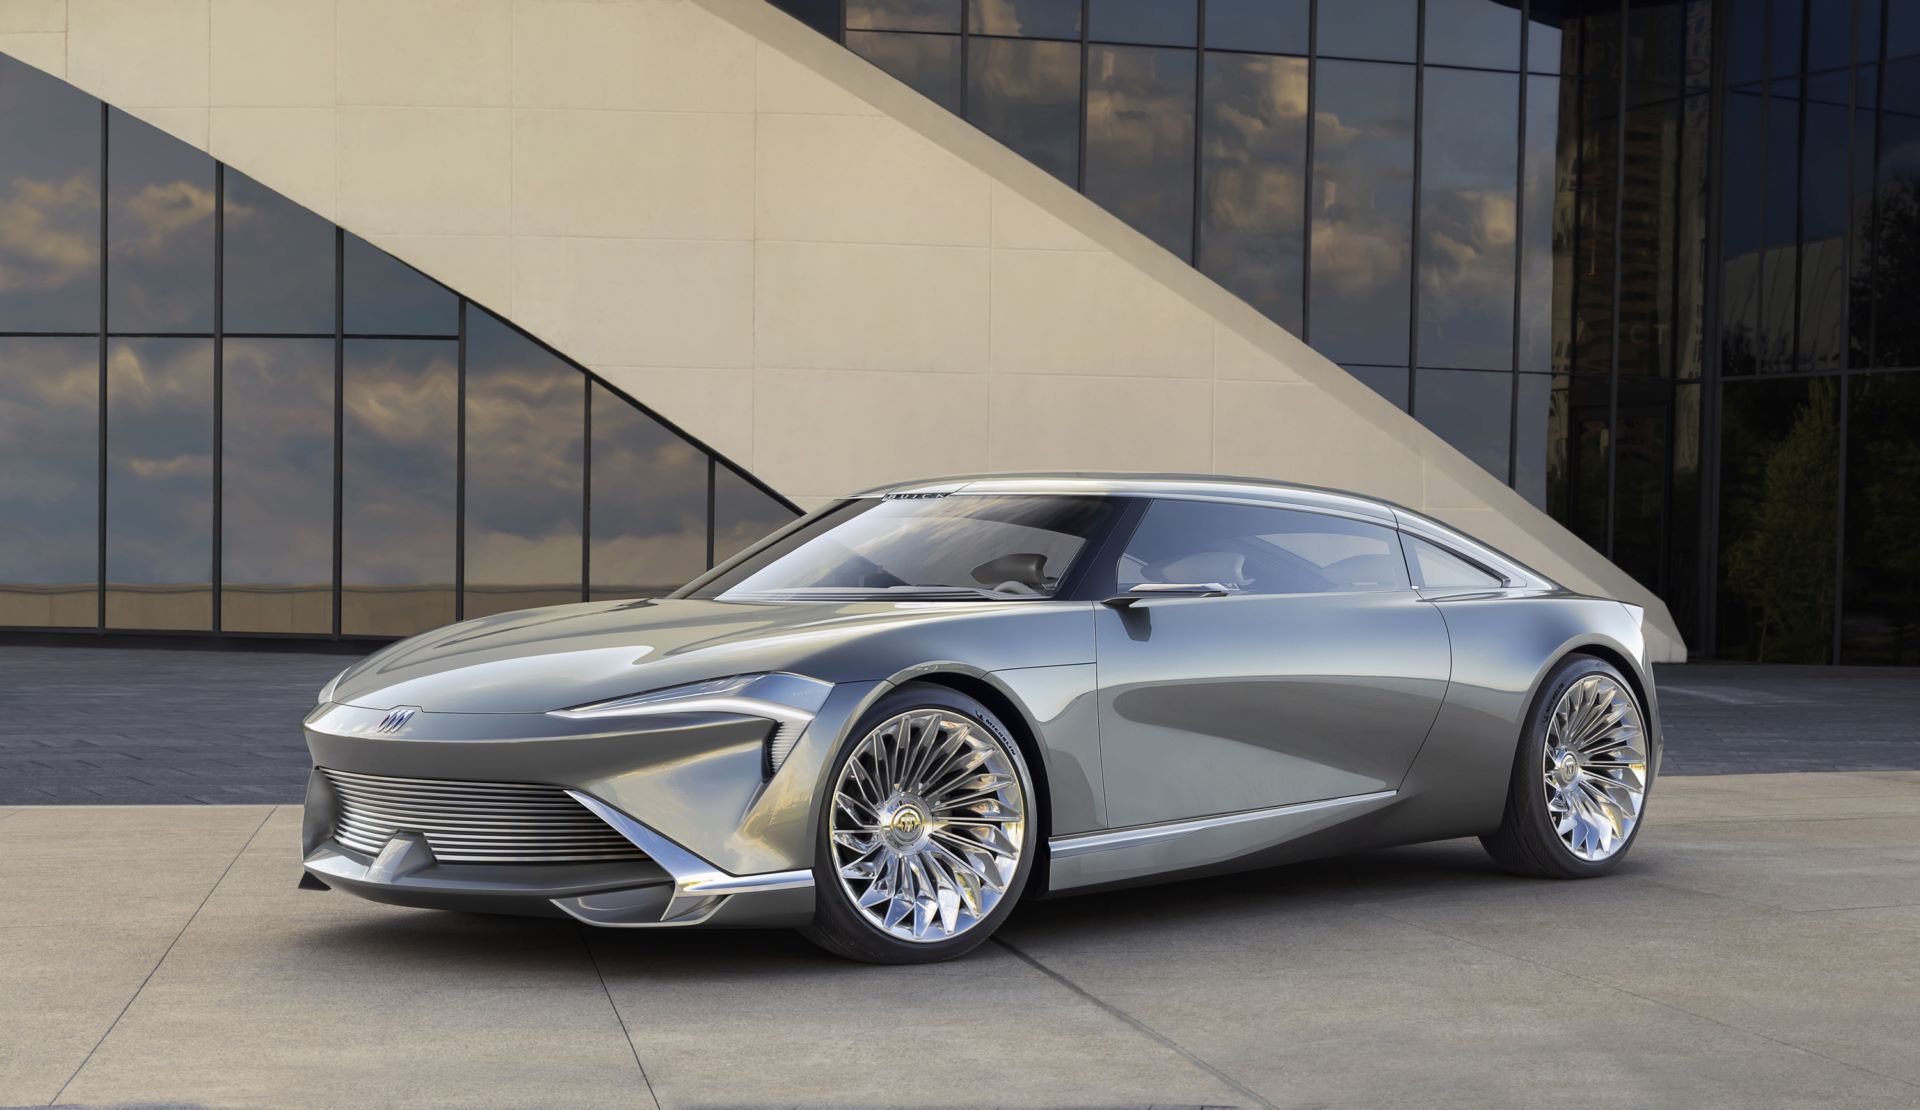 Buick Wildcat EV Concept: Με άγριες «ηλεκτρικές» διαθέσεις!